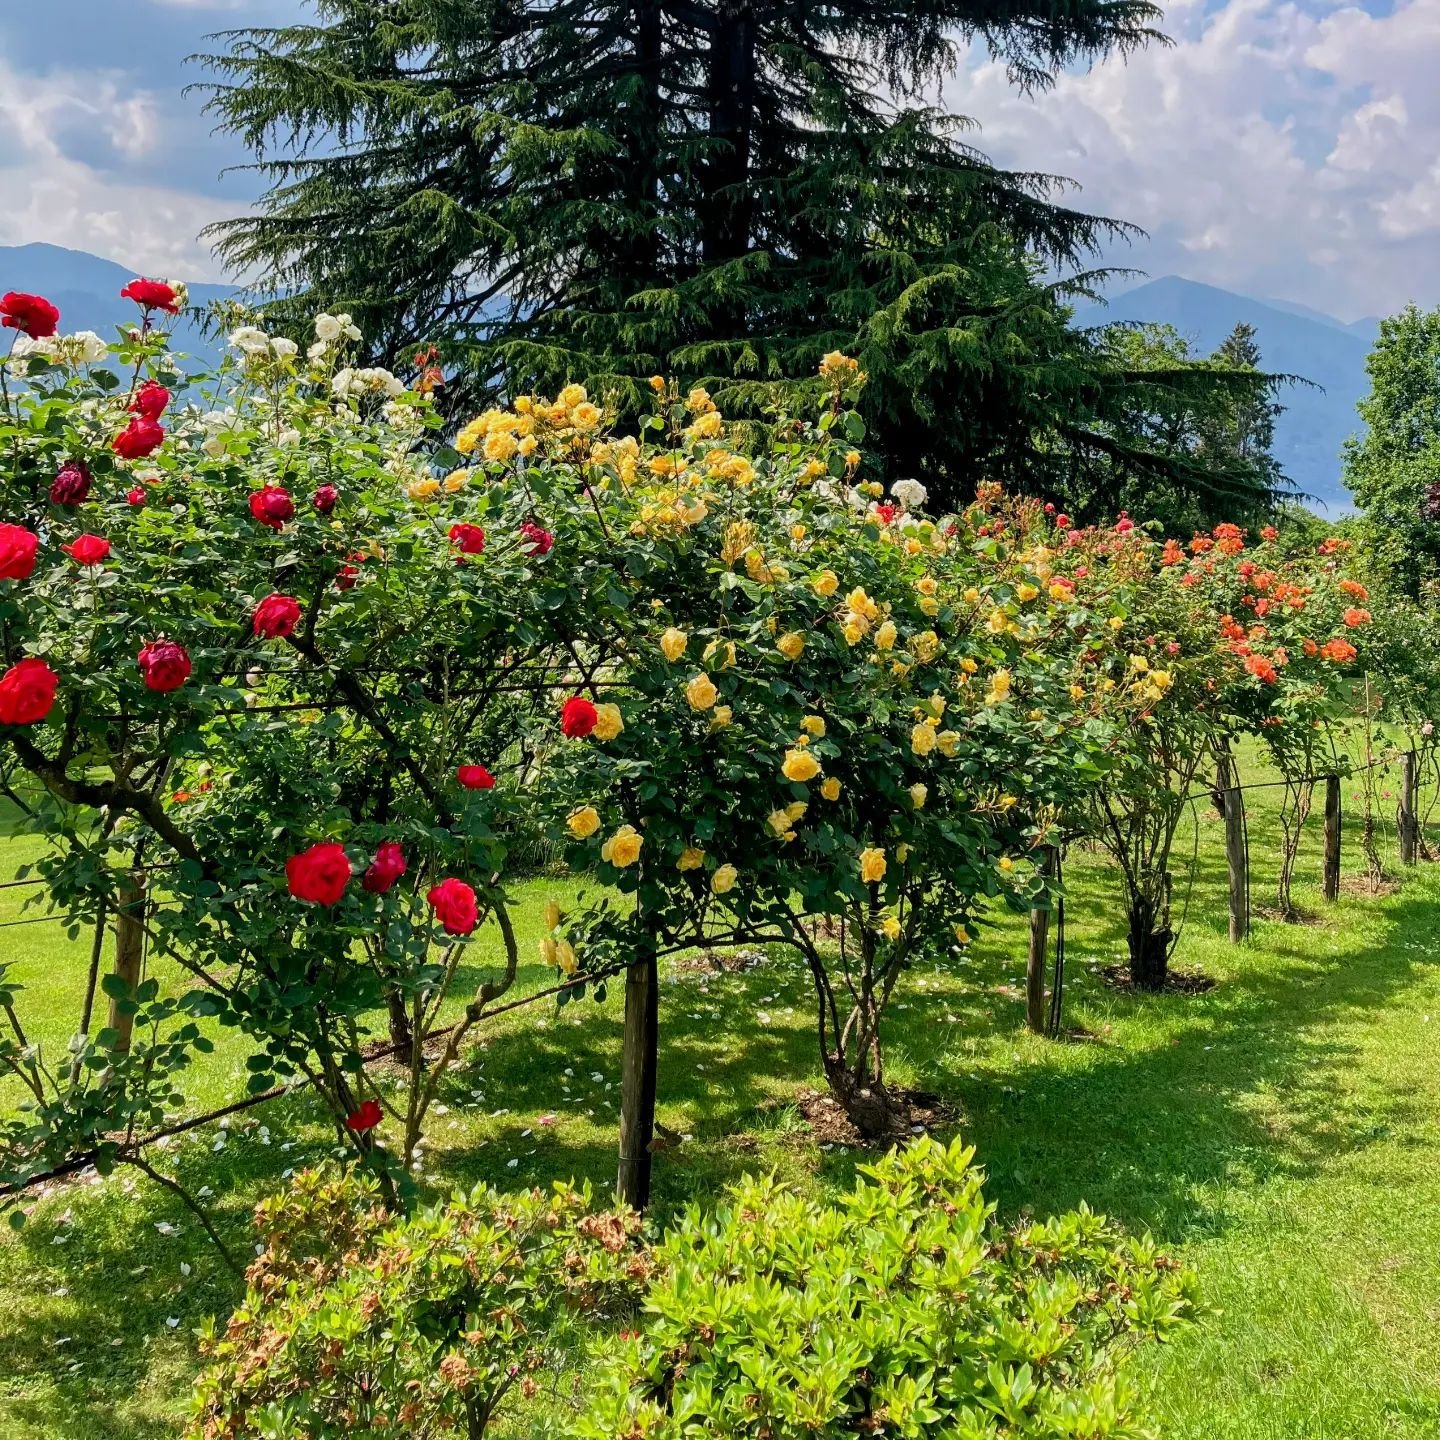 Blooming beauty at Giardino Lorella: A symphony of roses under the serene sky.

#GiardinoLorella #LakeOrta #Lagodorta #visititaly